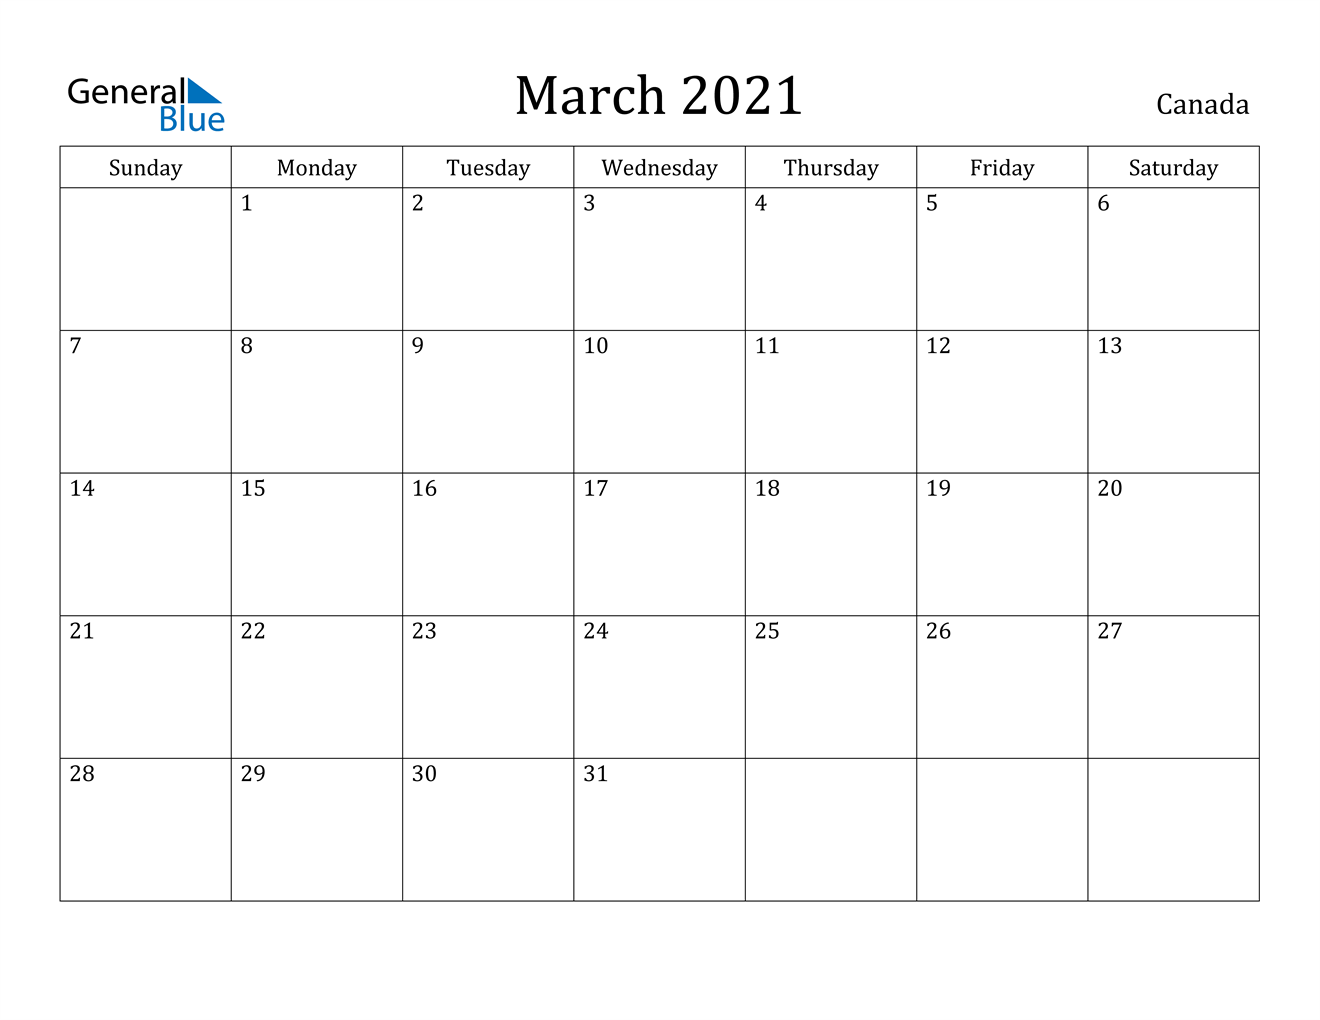 March 2021 Calendar - Canada